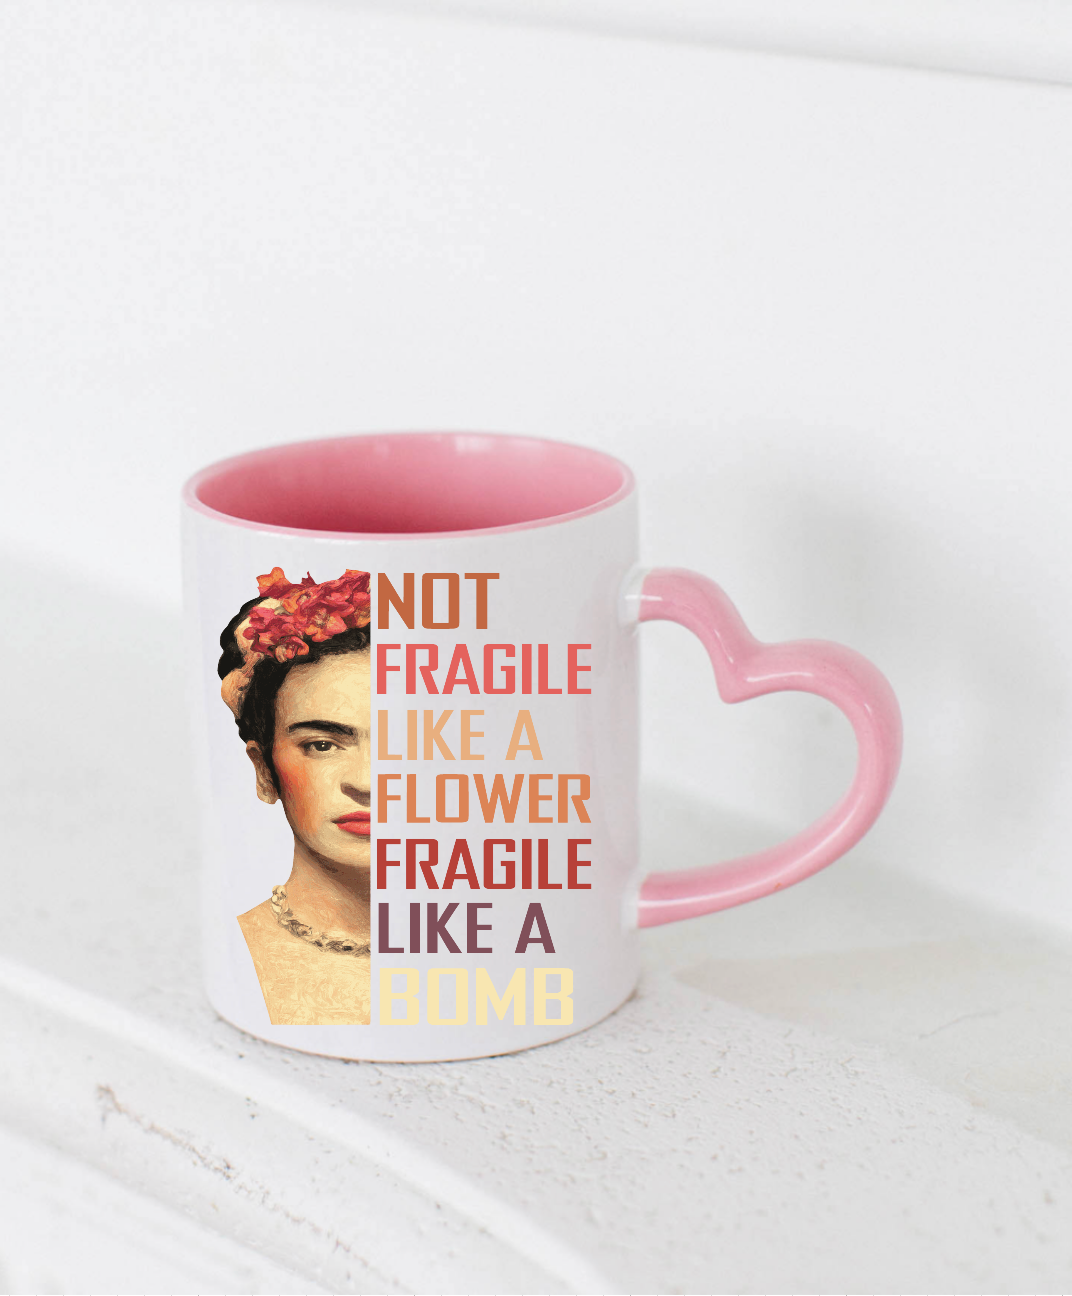 Fragile like a mug